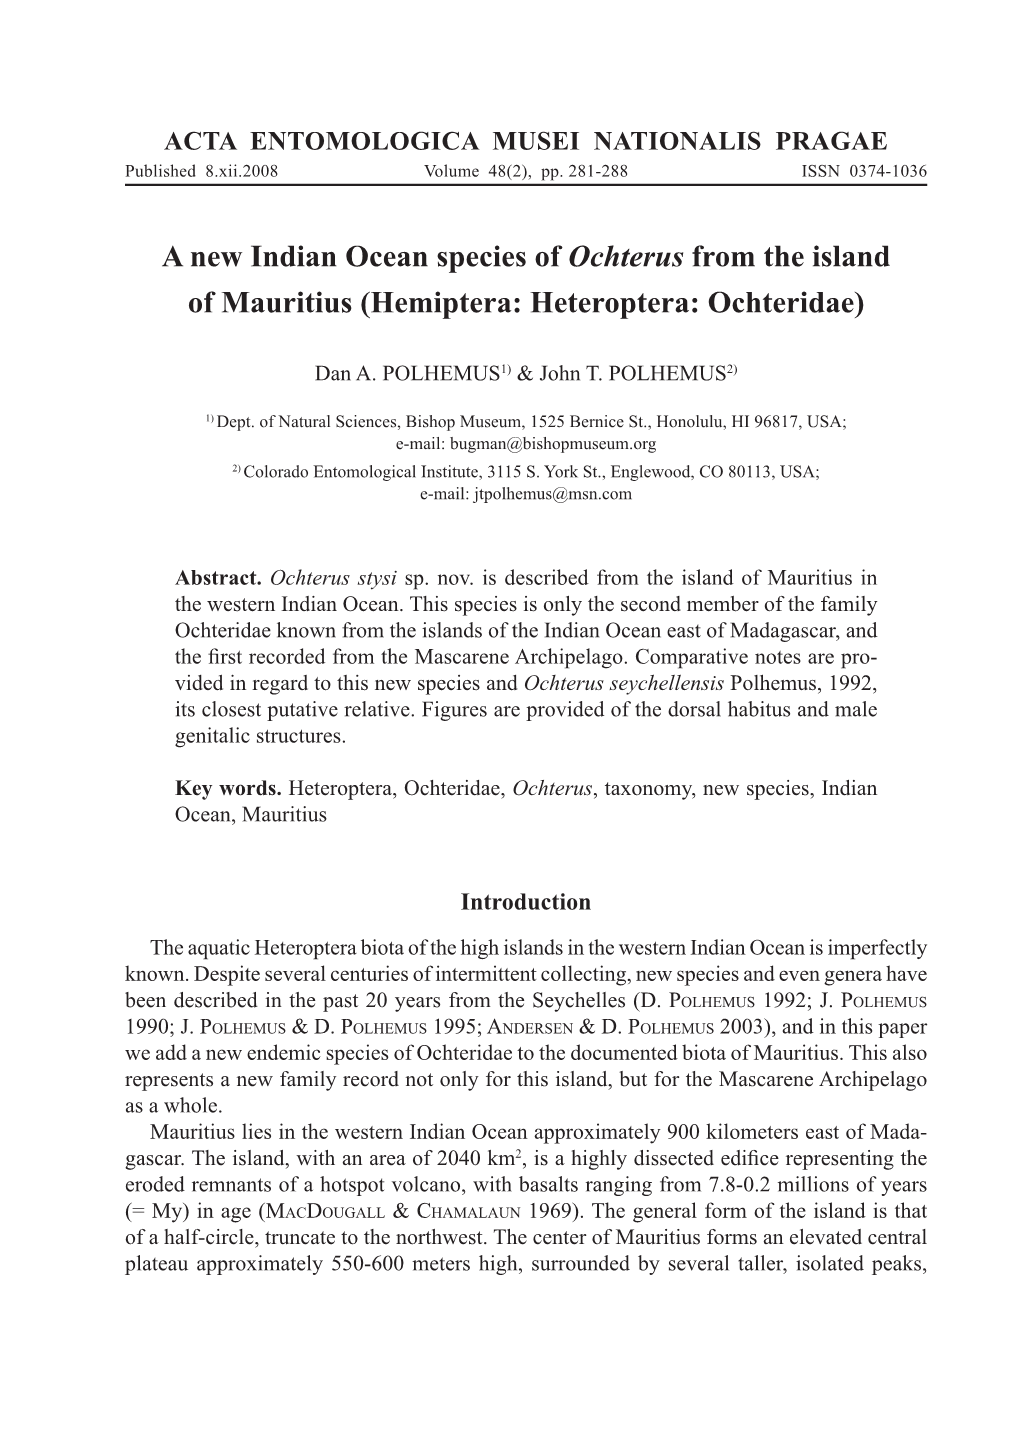 A New Indian Ocean Species of Ochterus from the Island of Mauritius (Hemiptera: Heteroptera: Ochteridae)